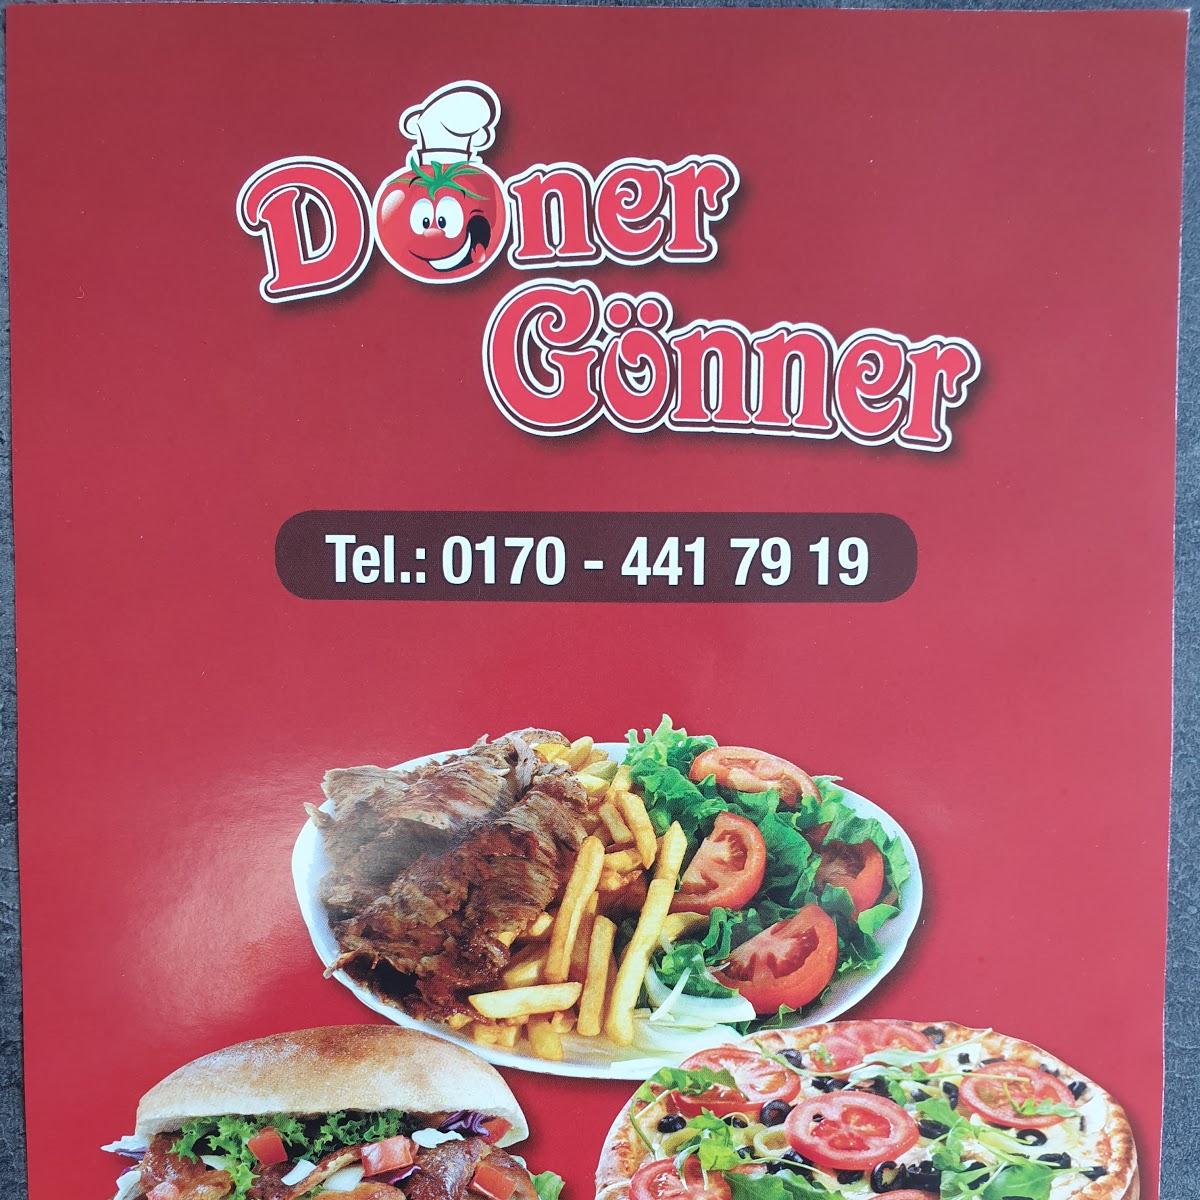 Restaurant "Döner Gönner reisbach" in  Reisbach